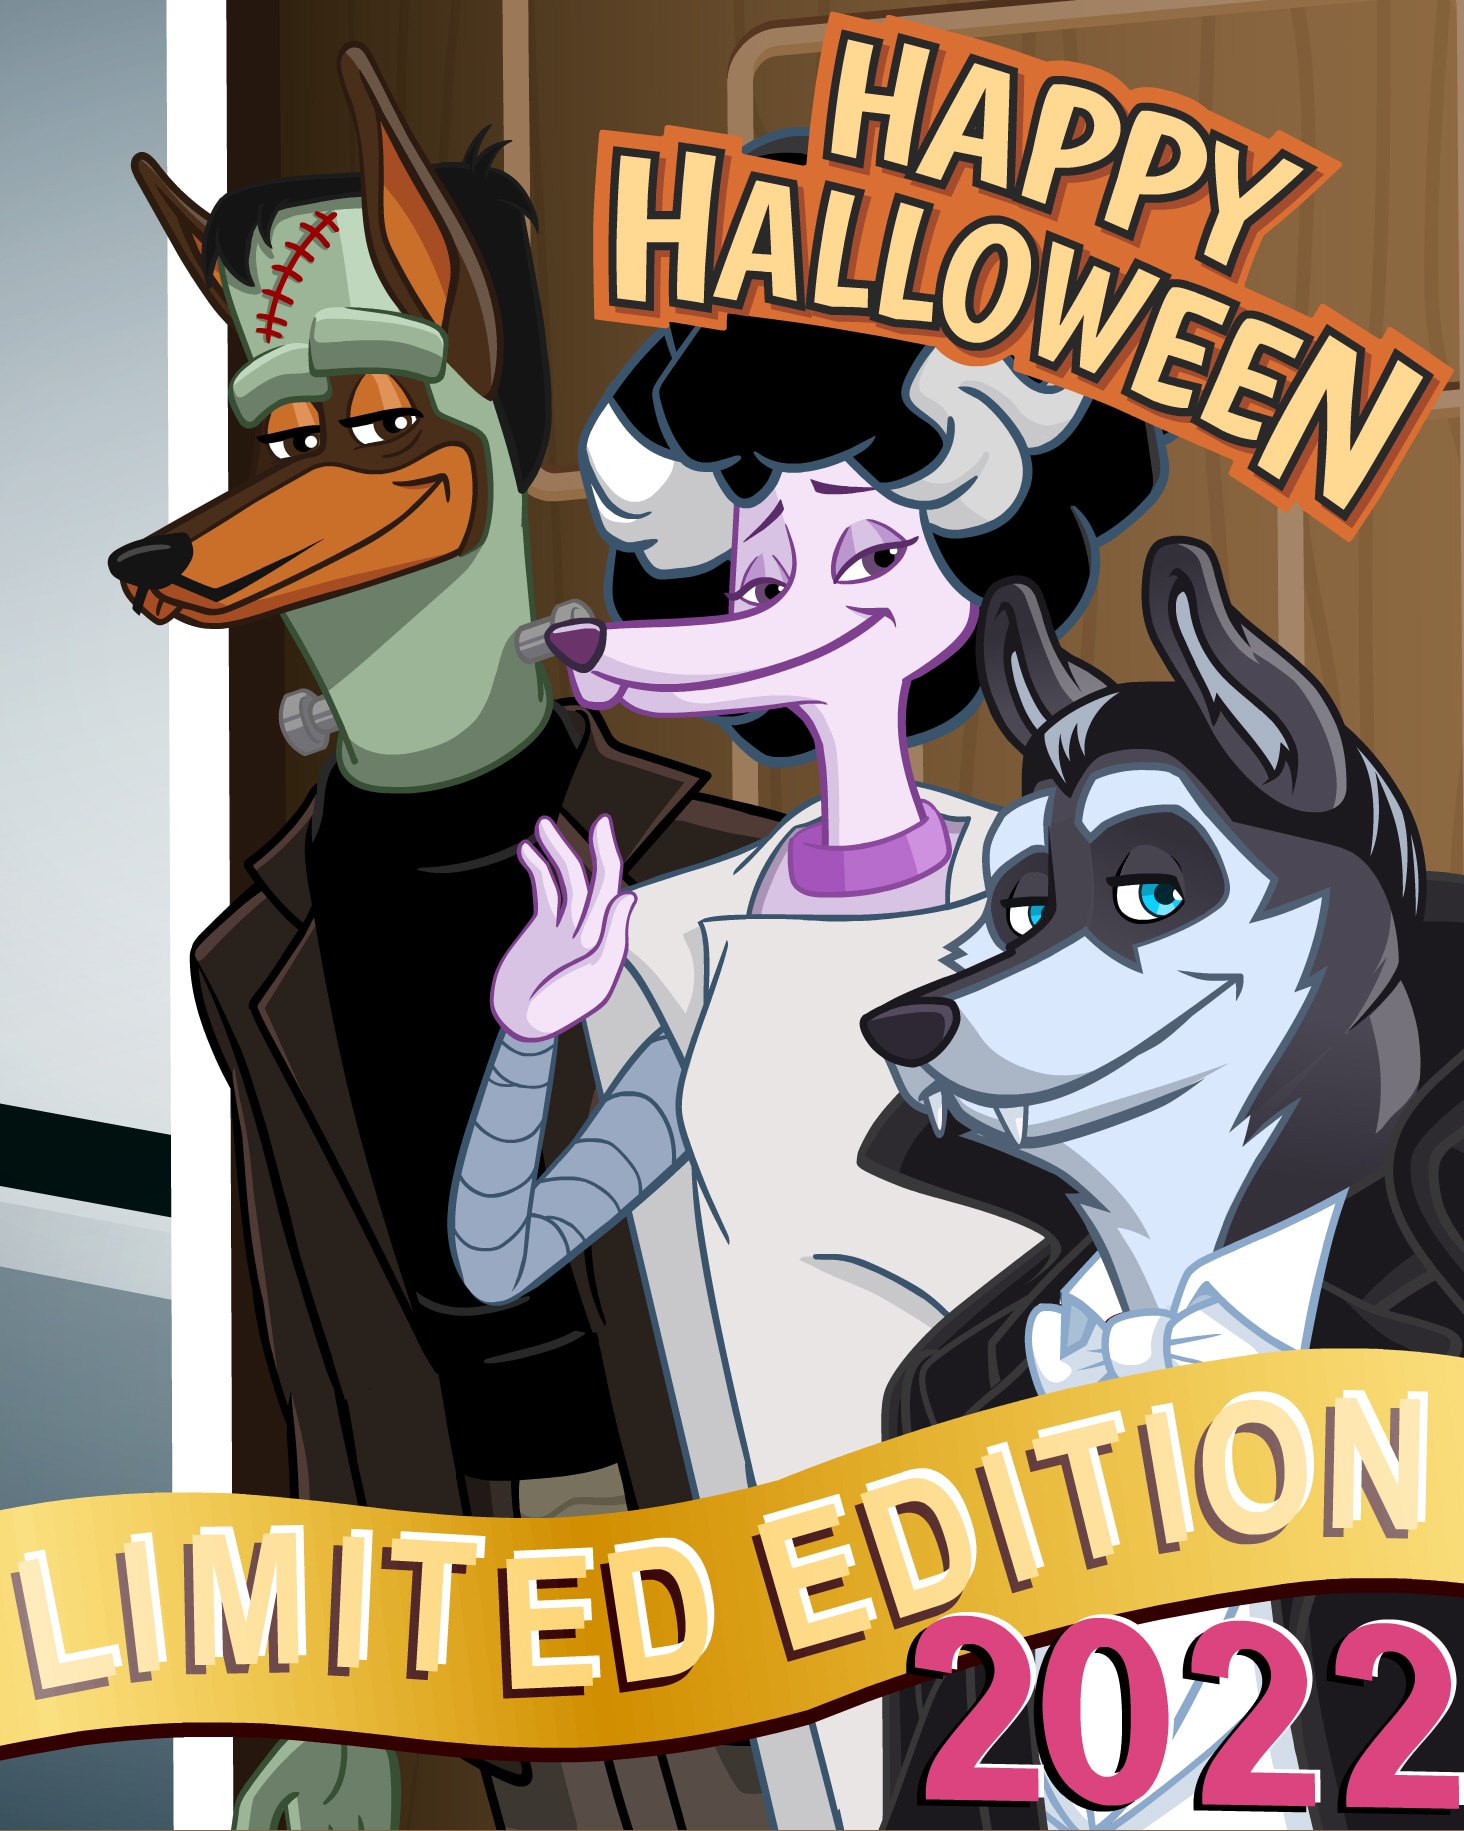 2022 Halloween Limited Edition Badge - Spades HD